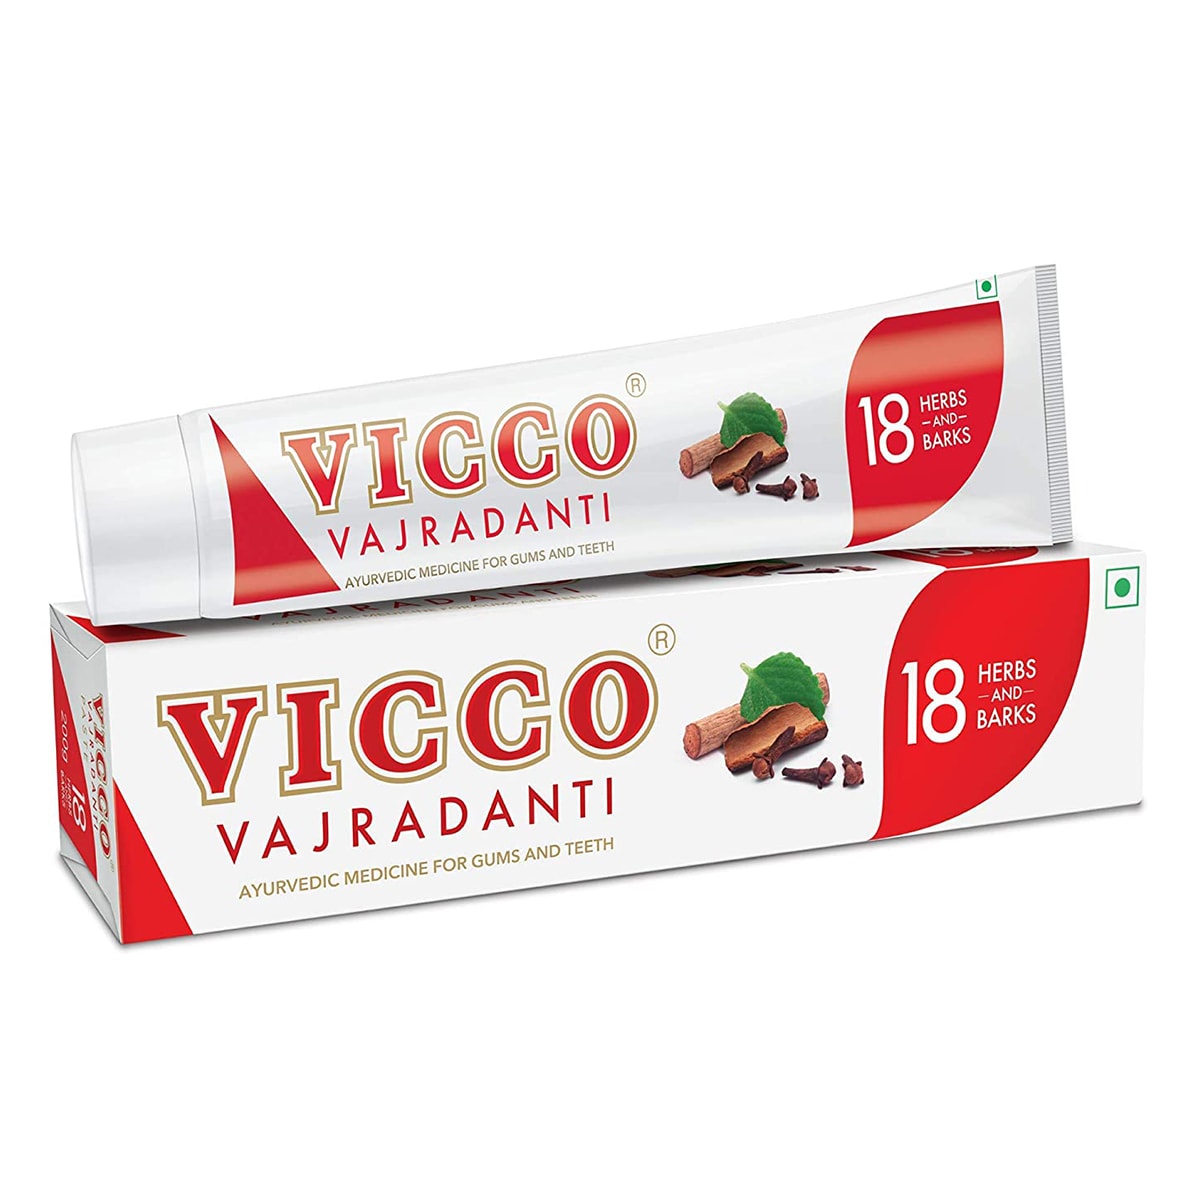 Buy Vicco Vajradanti Ayurvedic Medicine for Gums and Teeth - 200 gm